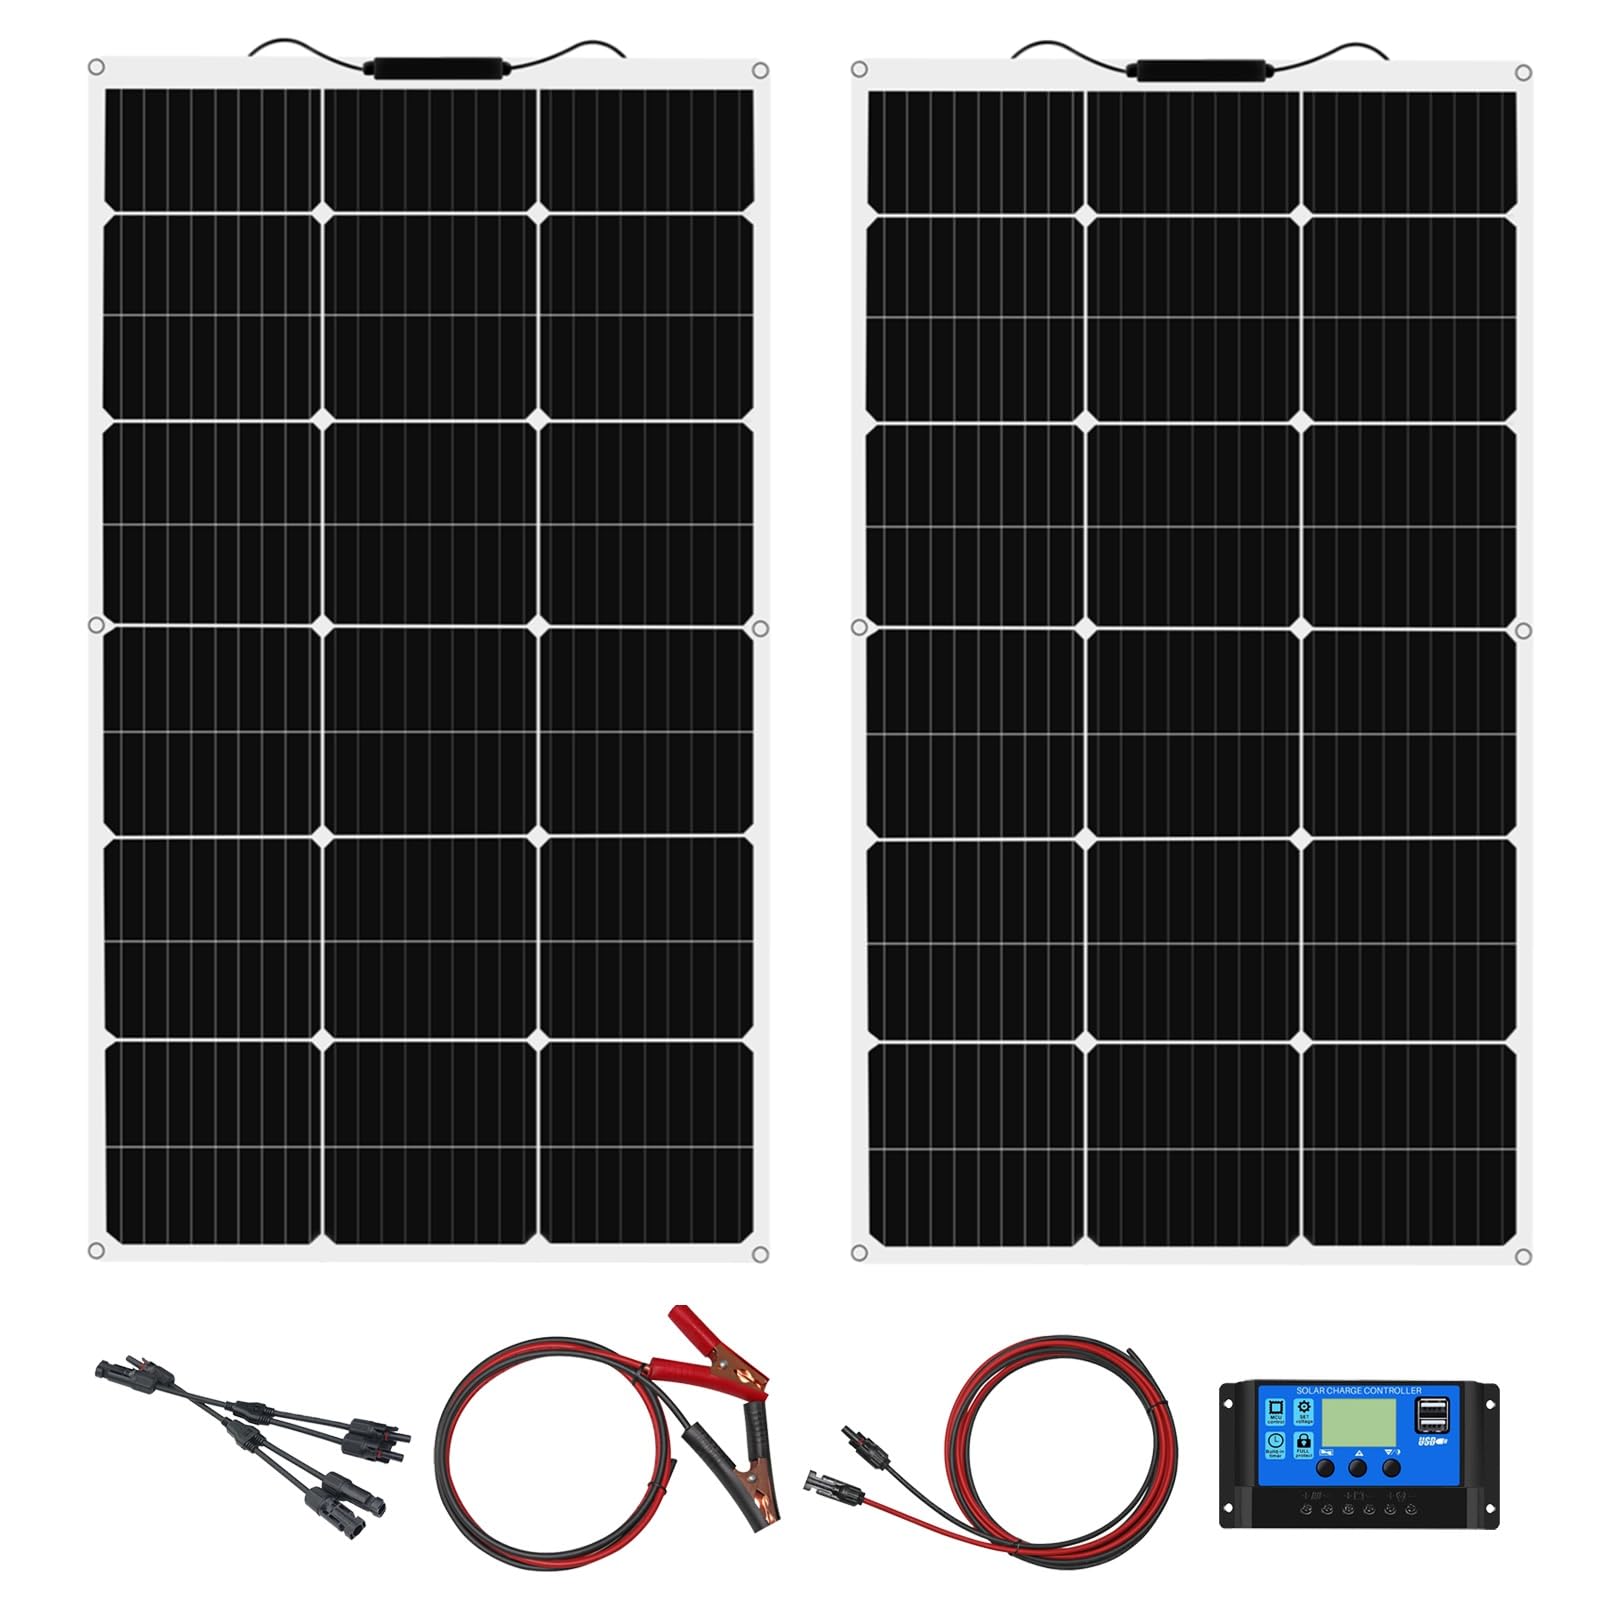 200W 12V Flexible Solarpanel Kit 2 stücke 100w Monocrystalline Off Grid Modul 20A Solar Laderegler für Auto, RV, Boot, Wohnwagen, Hause Dach 12v Outdoor Solar Ladegerät(200W solarpanel kit)